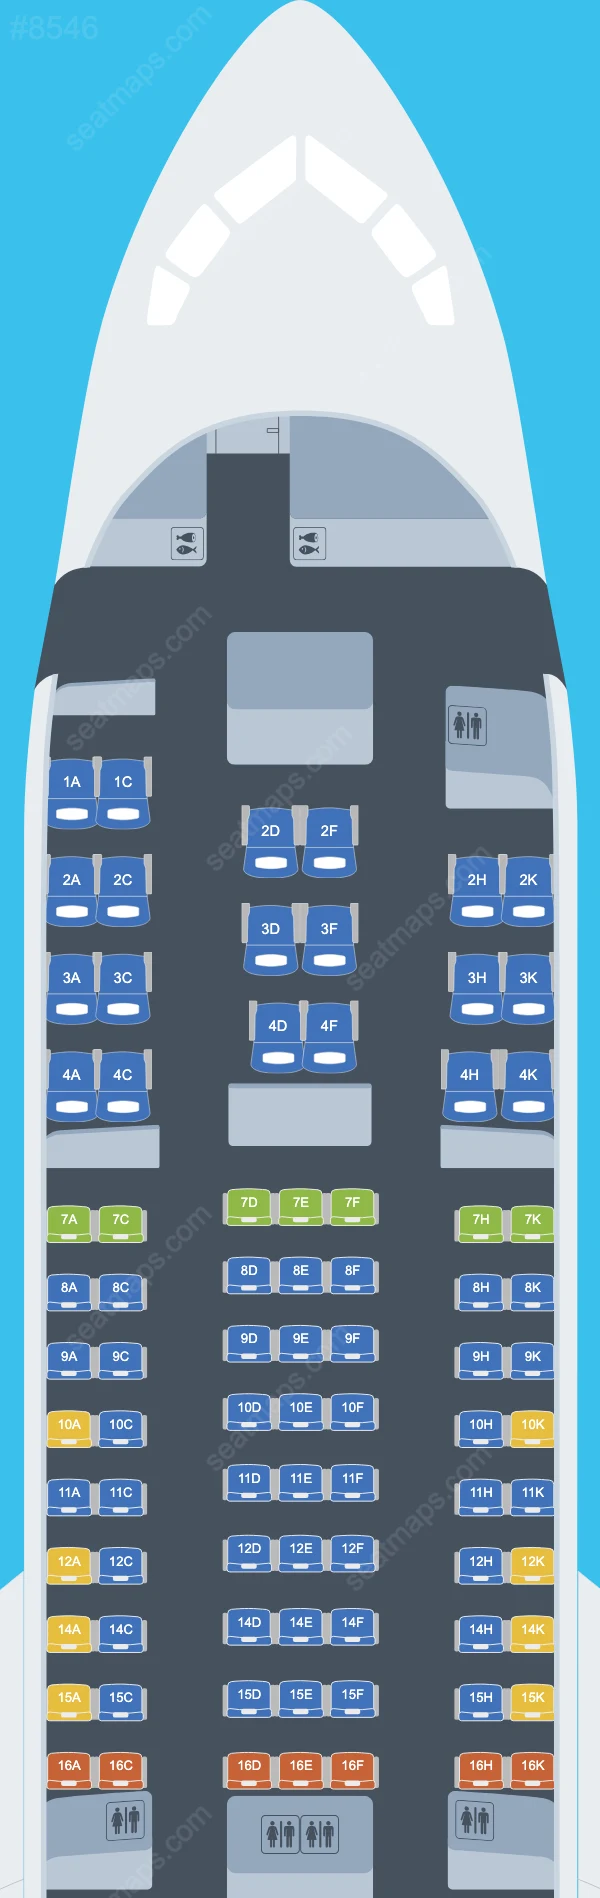 Omni Air International Boeing 767 Seat Maps 767-200 ER V.2